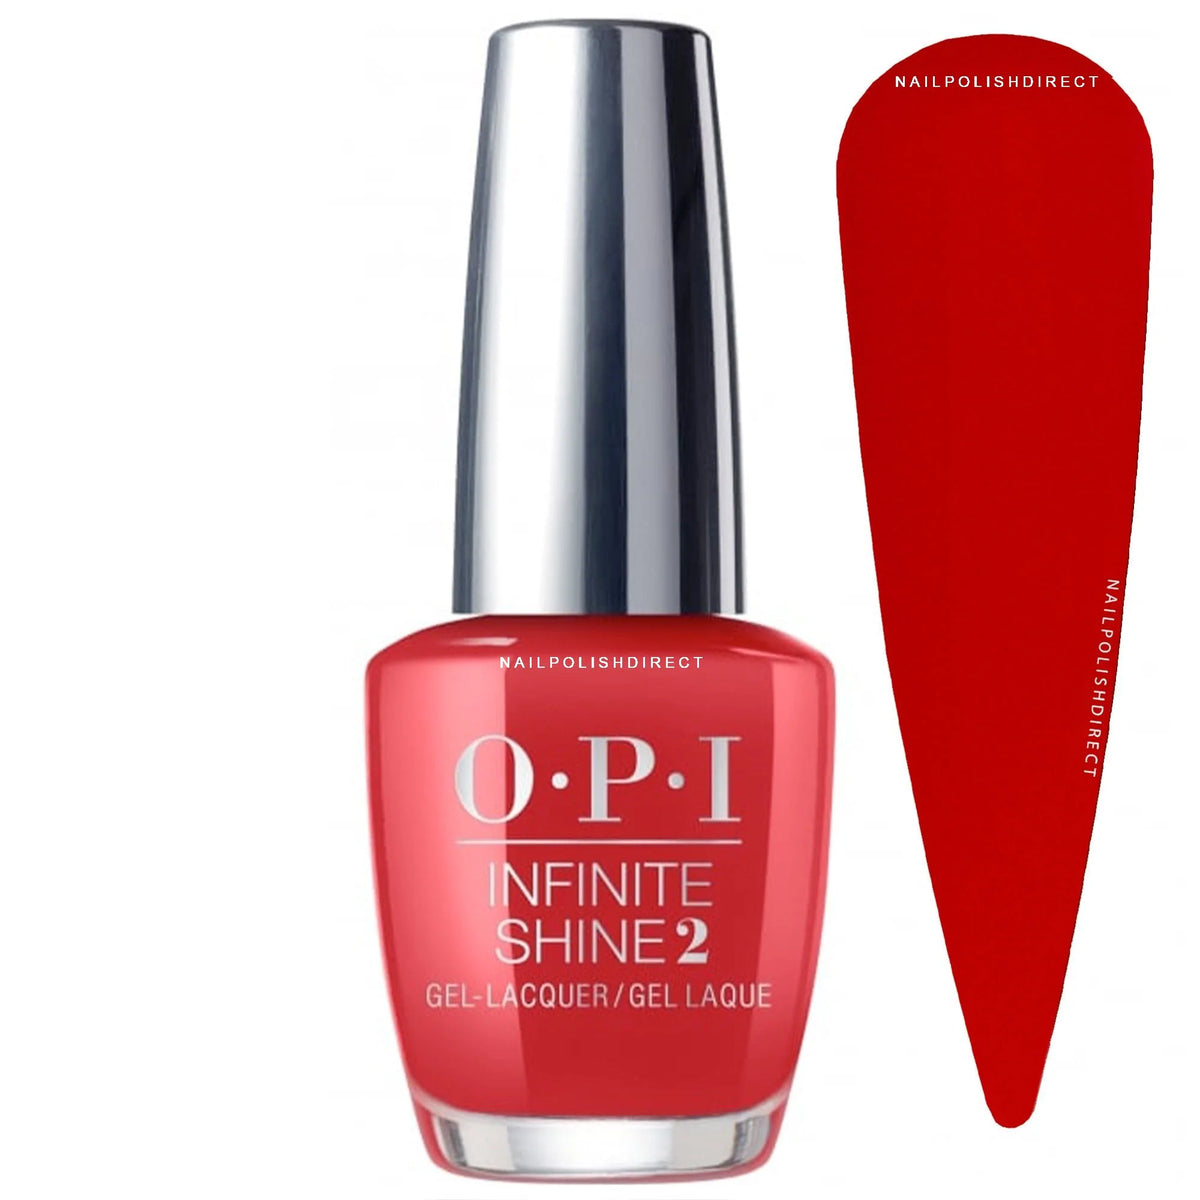 O.P.I Infinite Shine 2 - BIg Apple Red